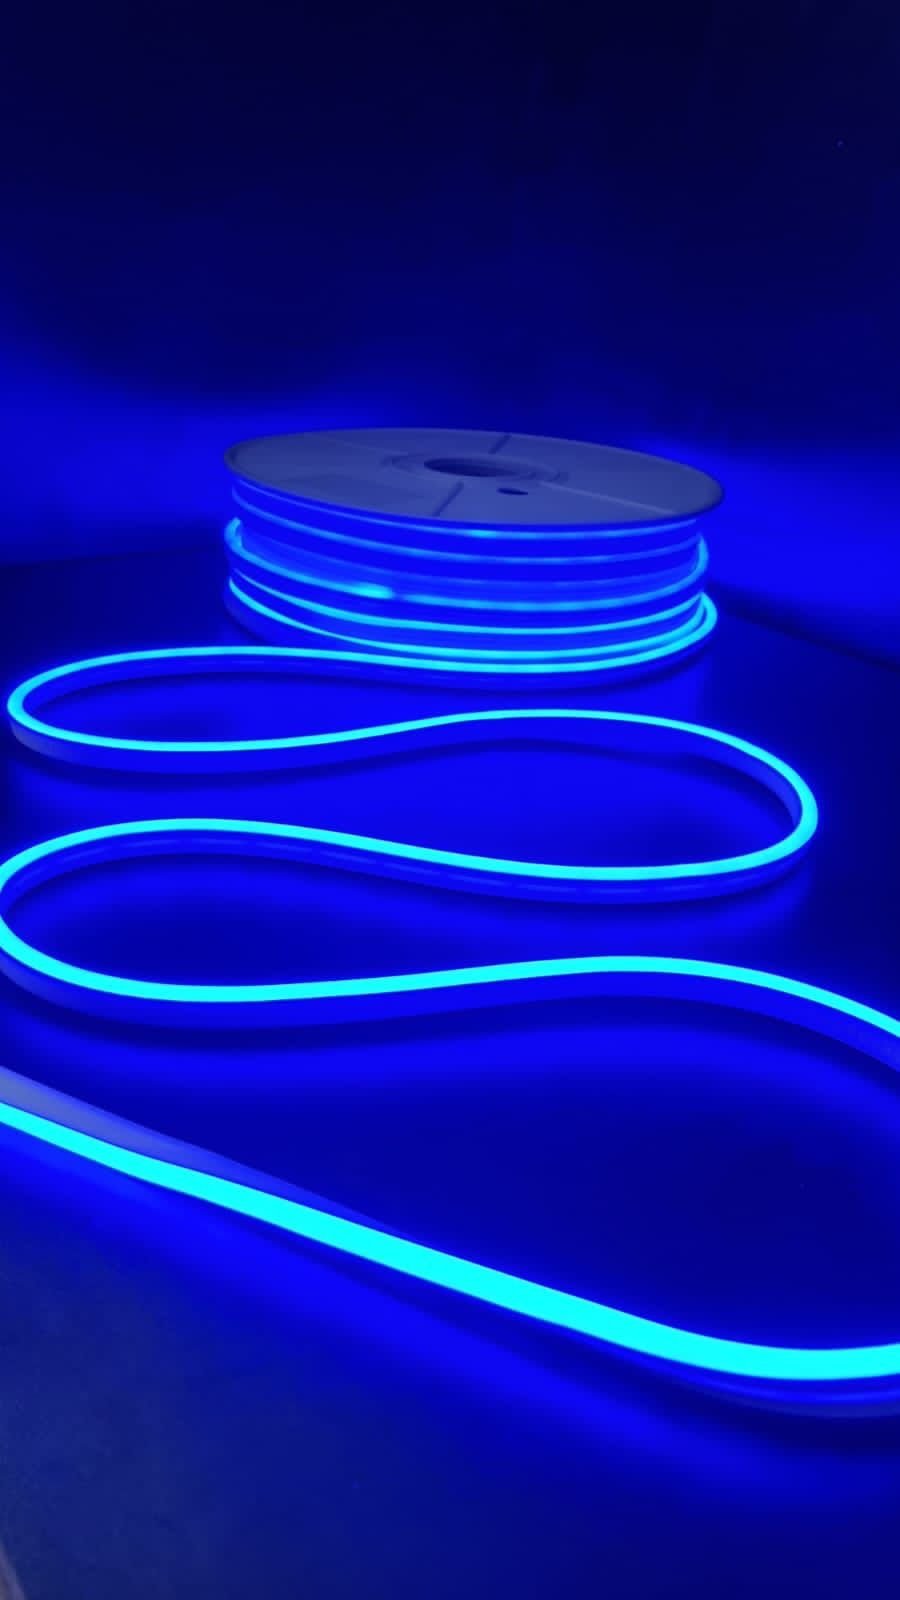 Mangueira Neon 12v - 5 metros - Painel Neon - Corte 2,5cm 6 x12mm - Cor: Azul - Bivolt